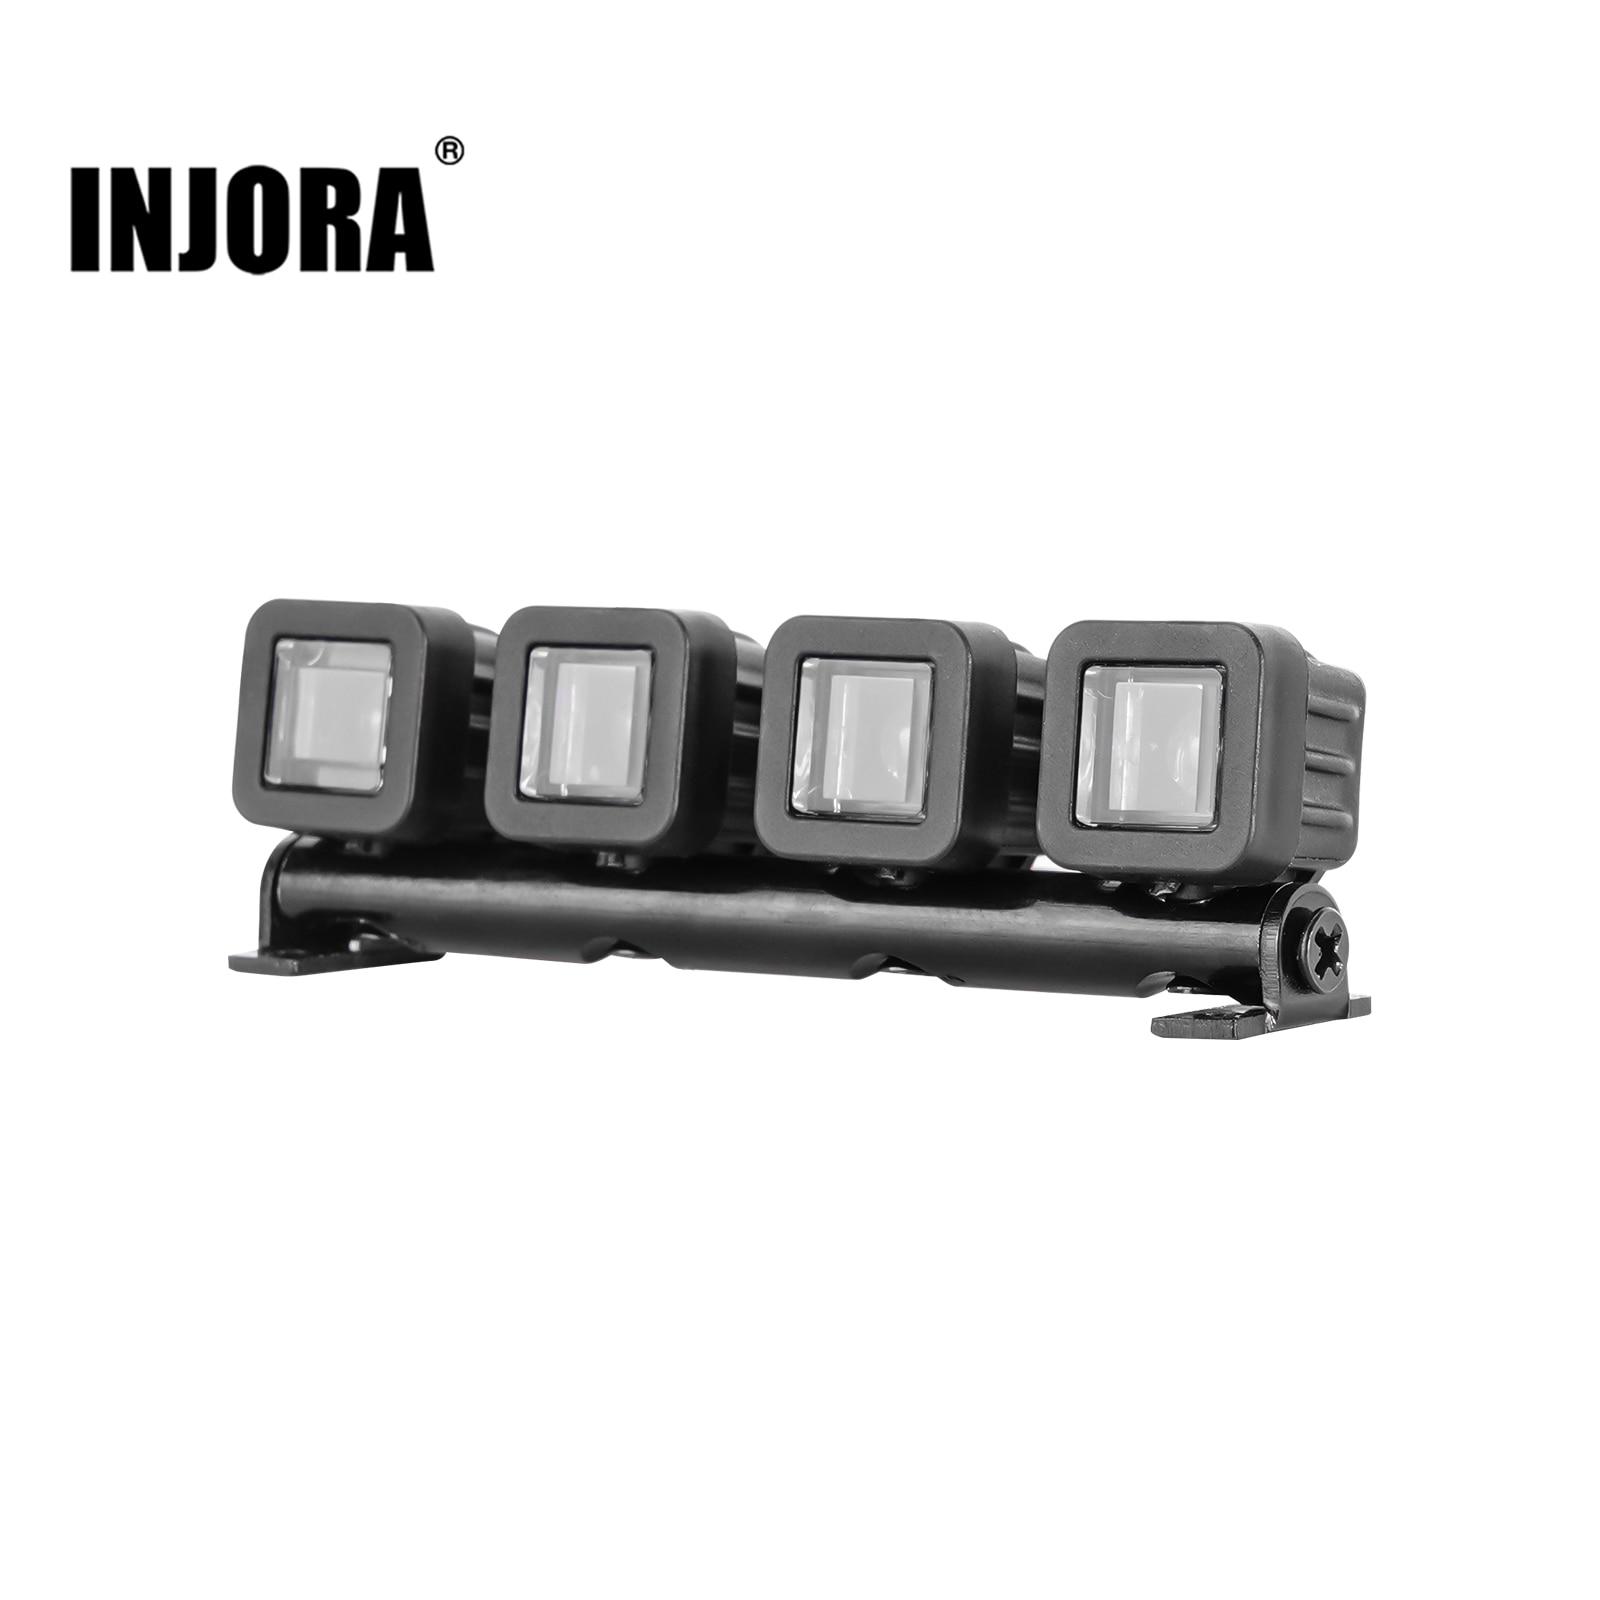 INJORA-Round-Square-Spotlights-Roof-Light-for-1-18-RC-Crawler-TRX4M-Defender-Upgrade-4M-31.jpg